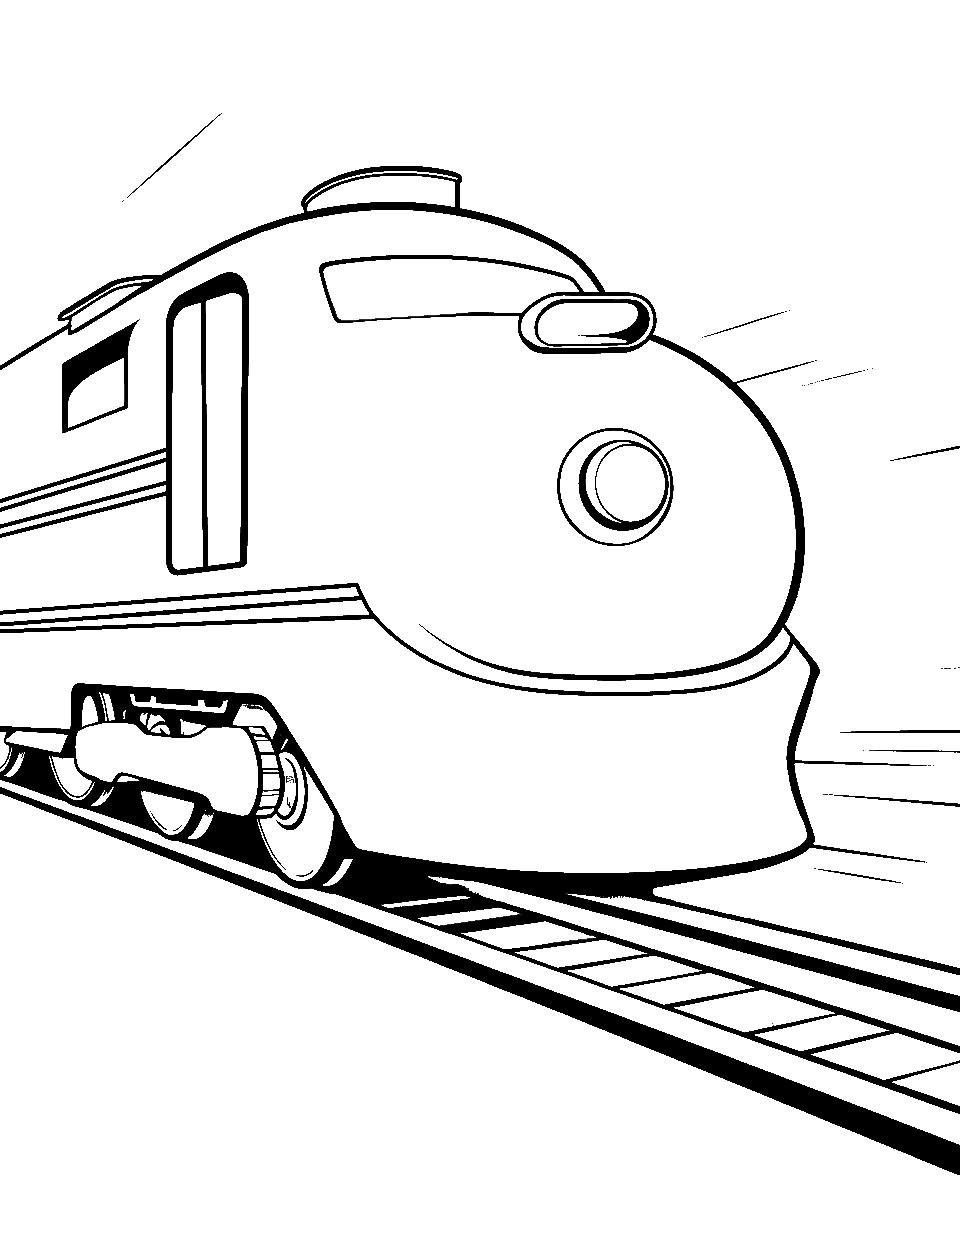 Futuristic Bullet Train Coloring Page - A futuristic bullet train speeding on a sleek track.